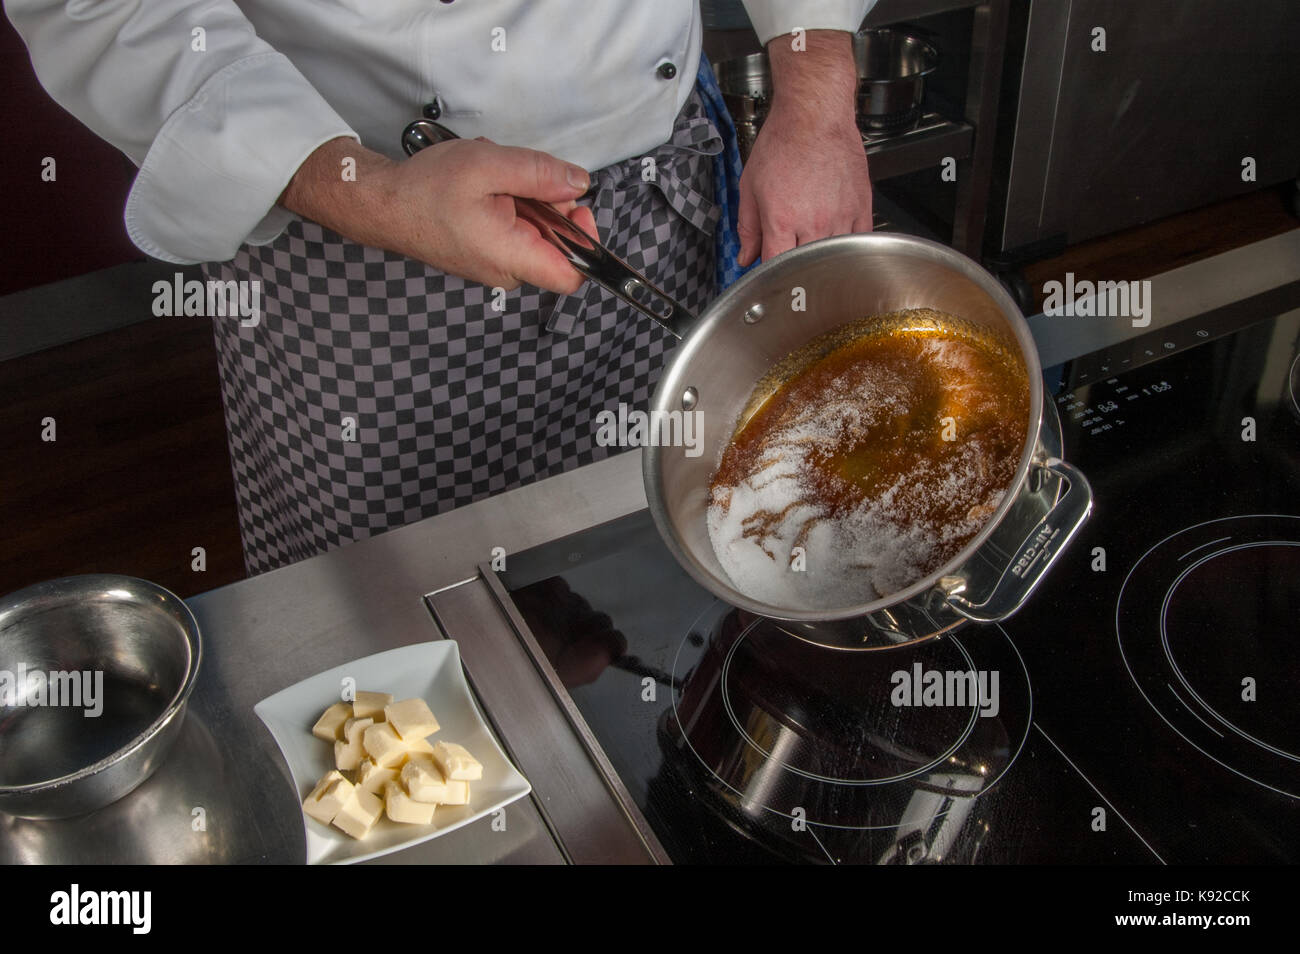 La préparation Creme caramell, Restaurant Allegria, Chef Alexander Tschebull, Hambourg, Allemagne Banque D'Images